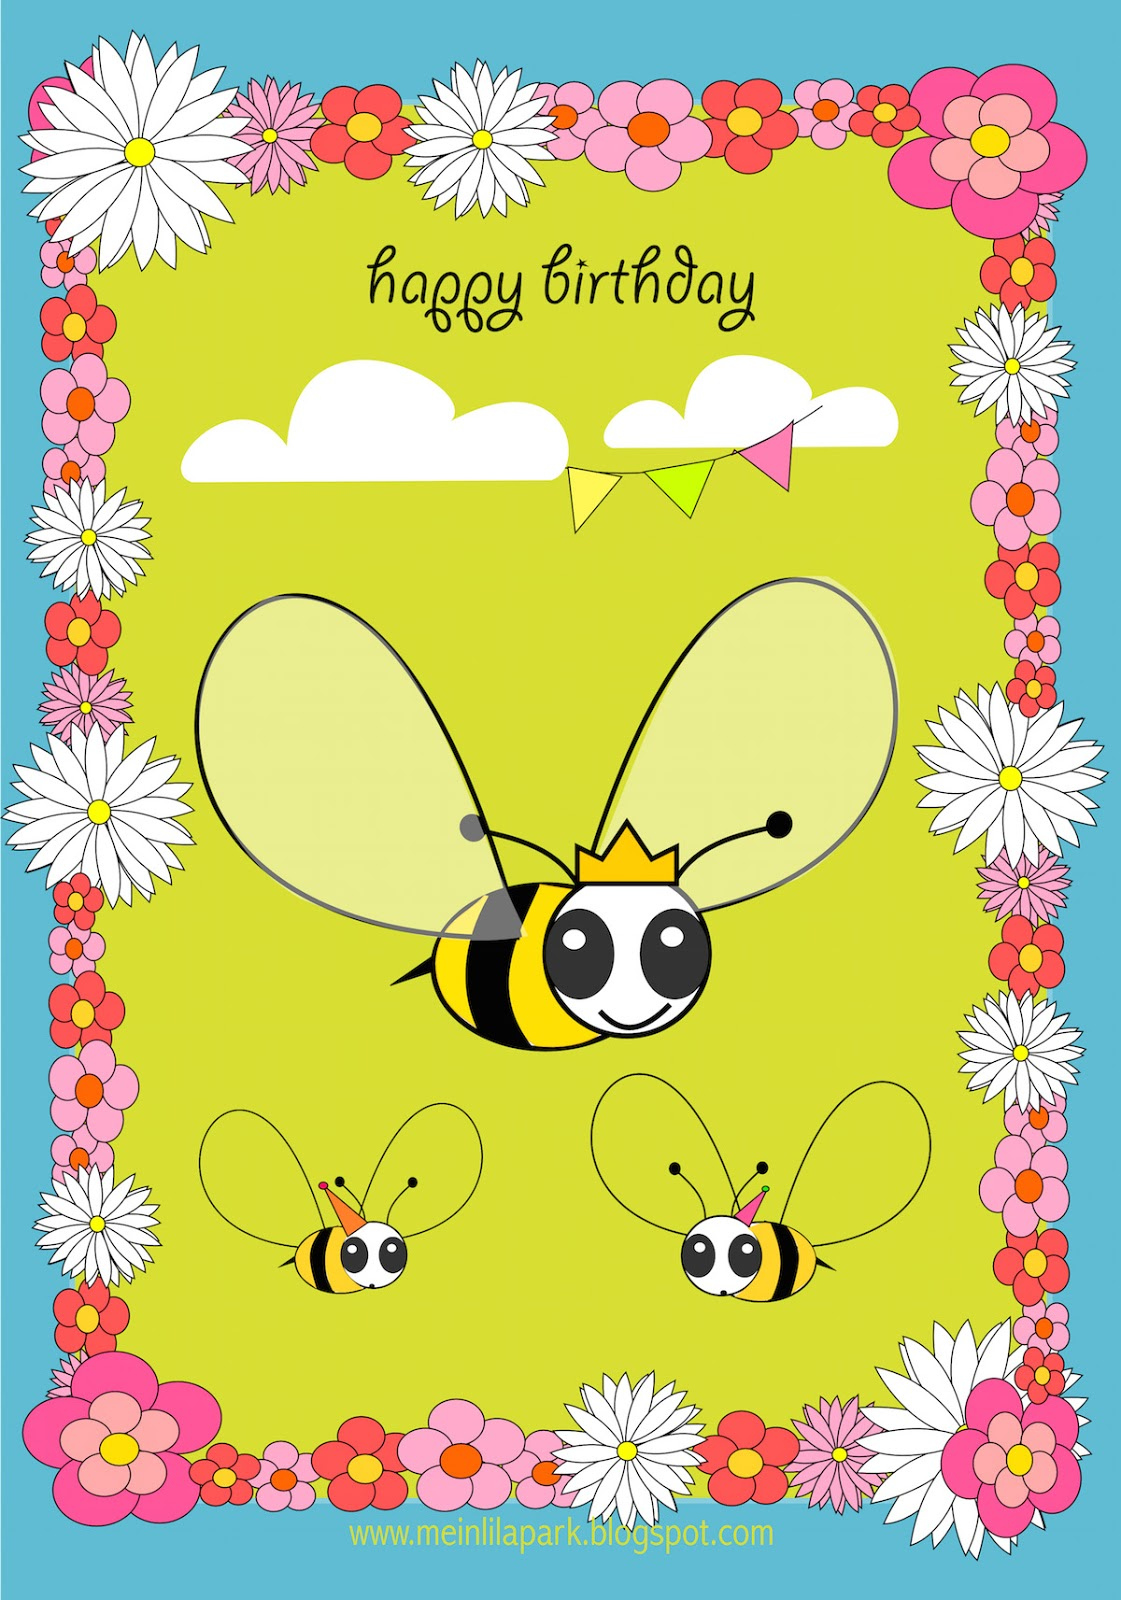 Free Printable Happy Birthday Card For Kids Ausdruckbare | FREE ...